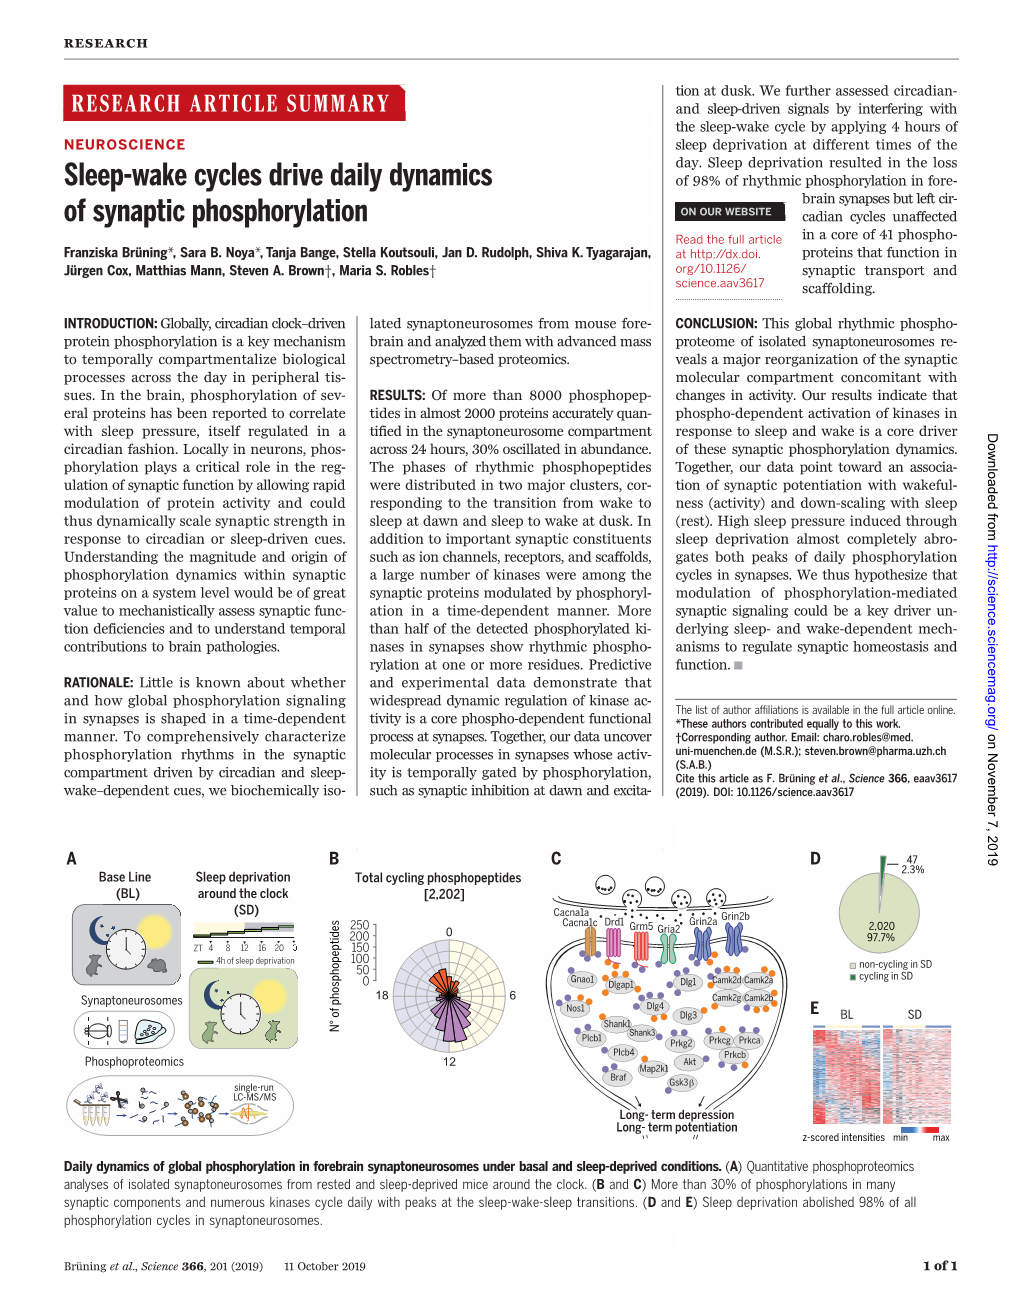 Sleep-Wake Cycles Drive Daily Dynamics of Synaptic Phosphorylation Franziska Brüning, Sara B